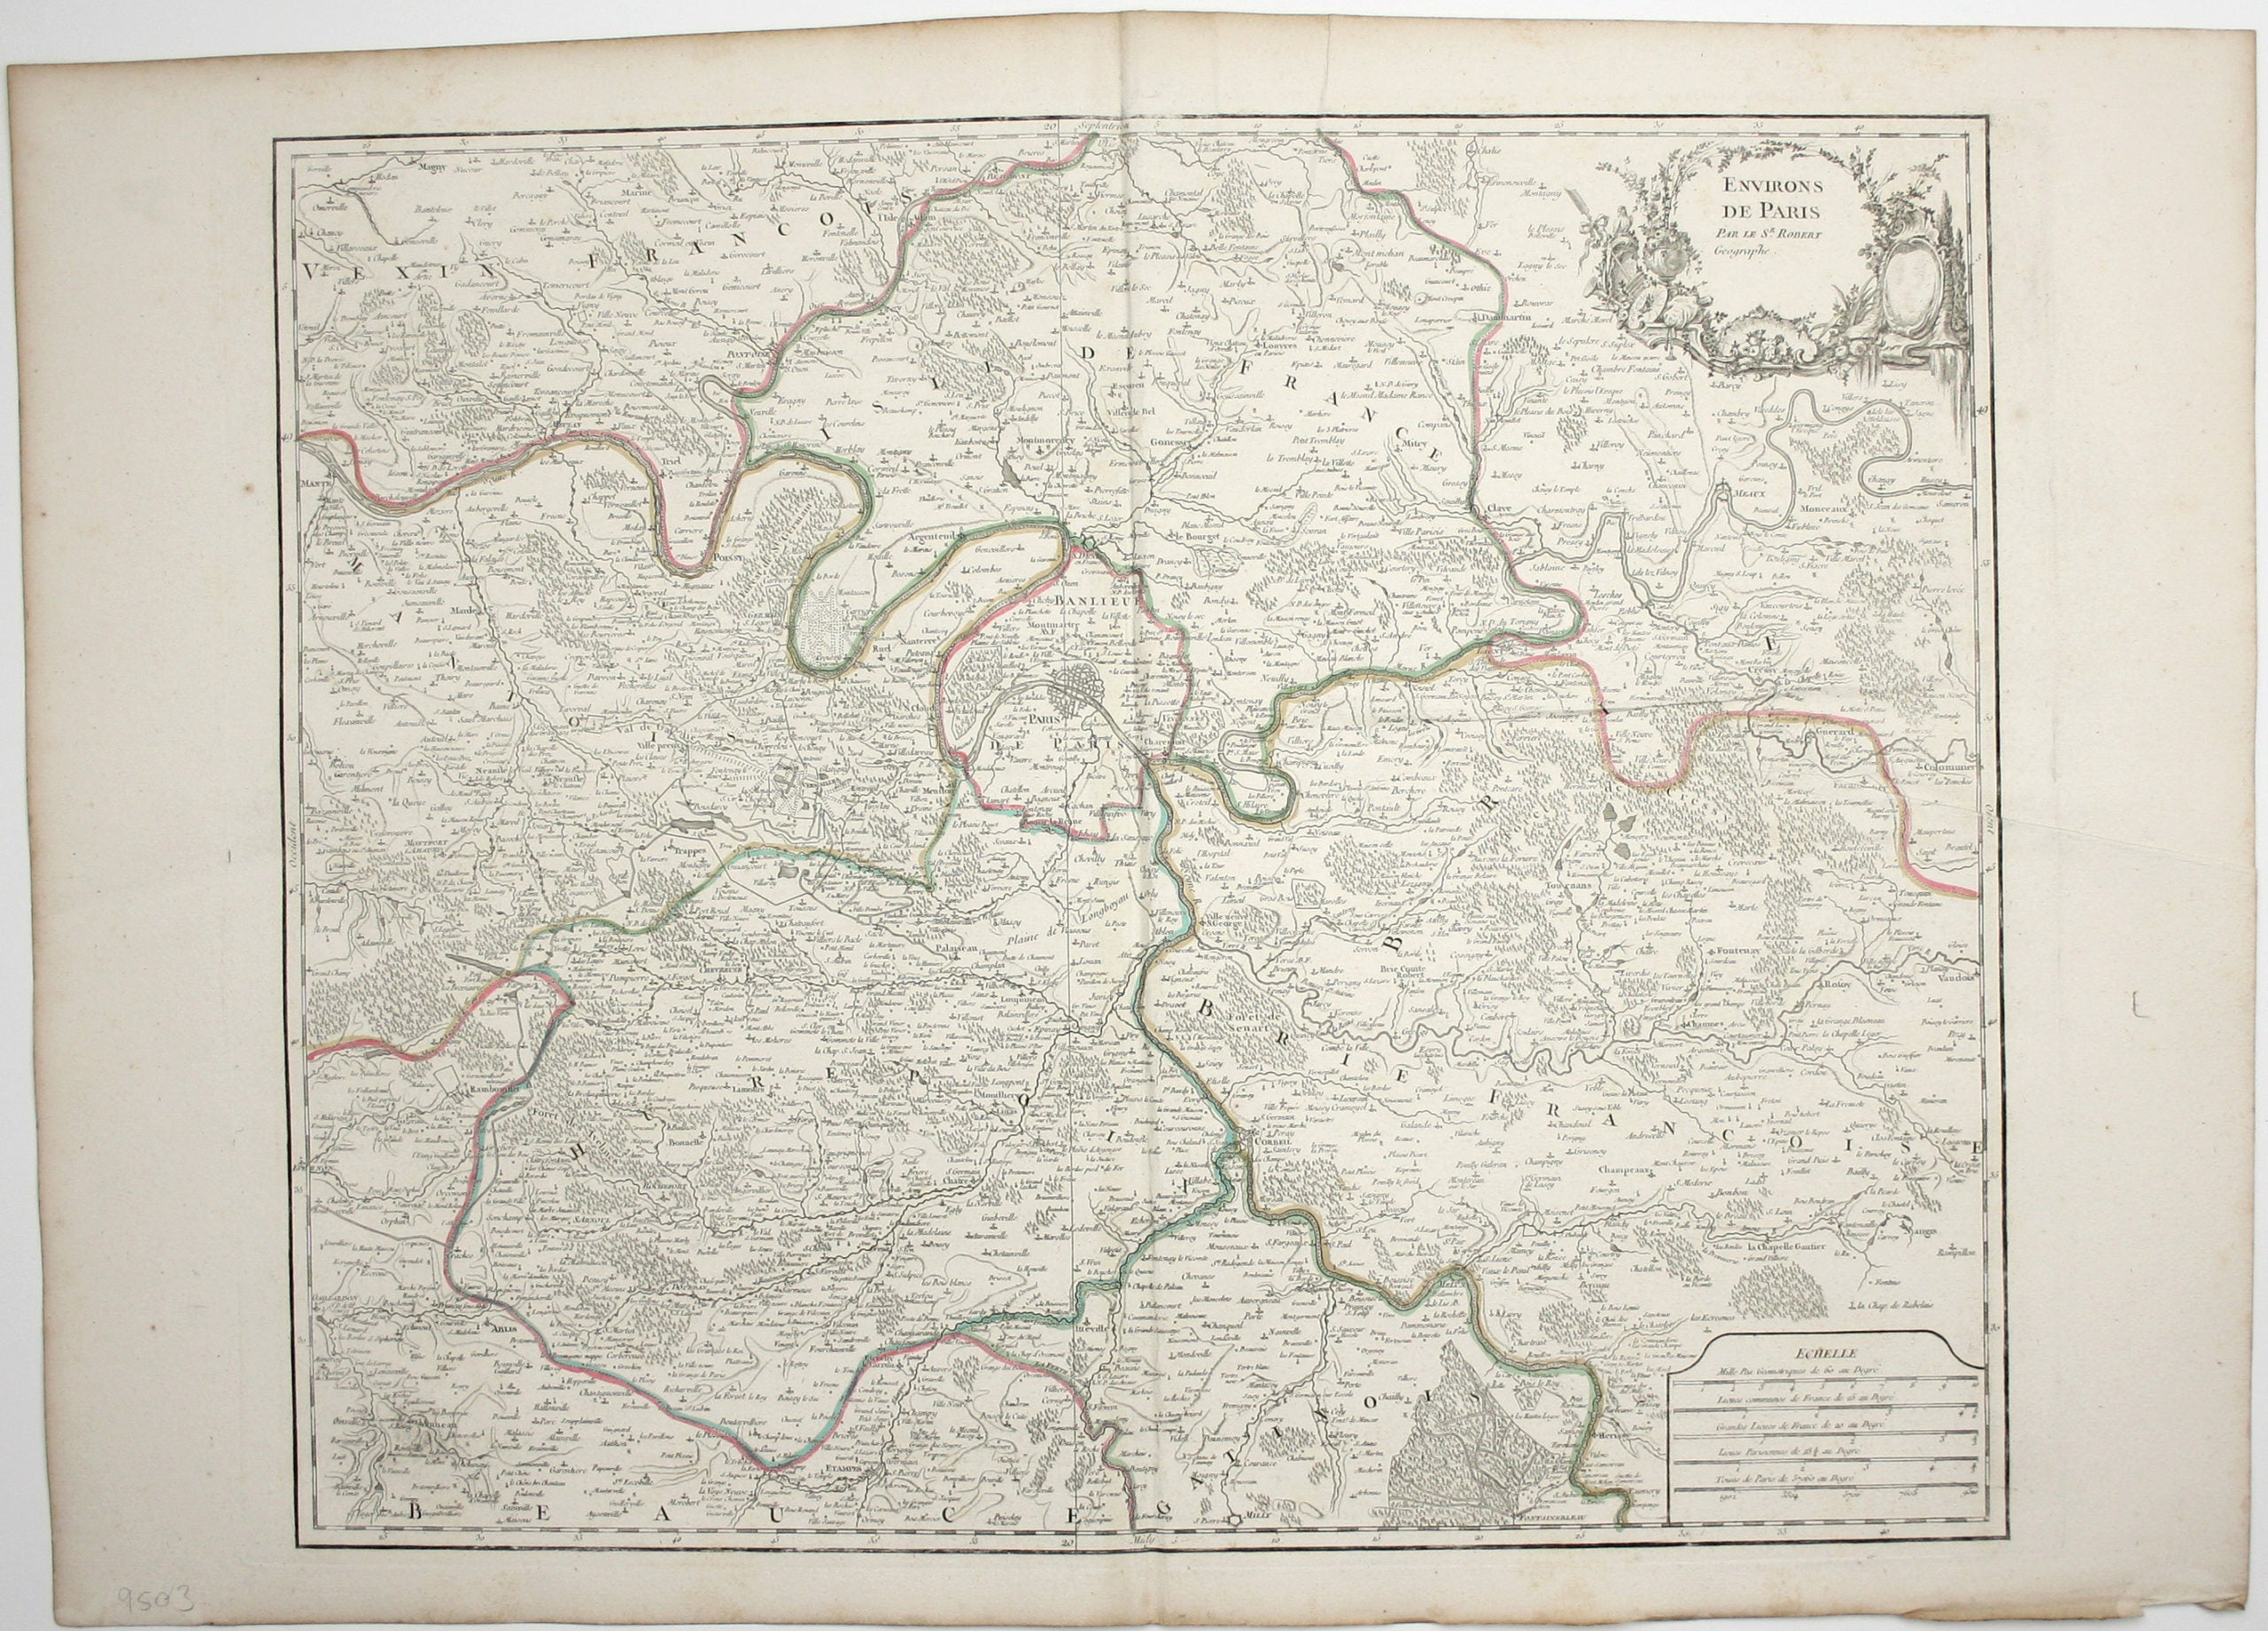 Robert de Vaugondy’s Map of Paris Environs